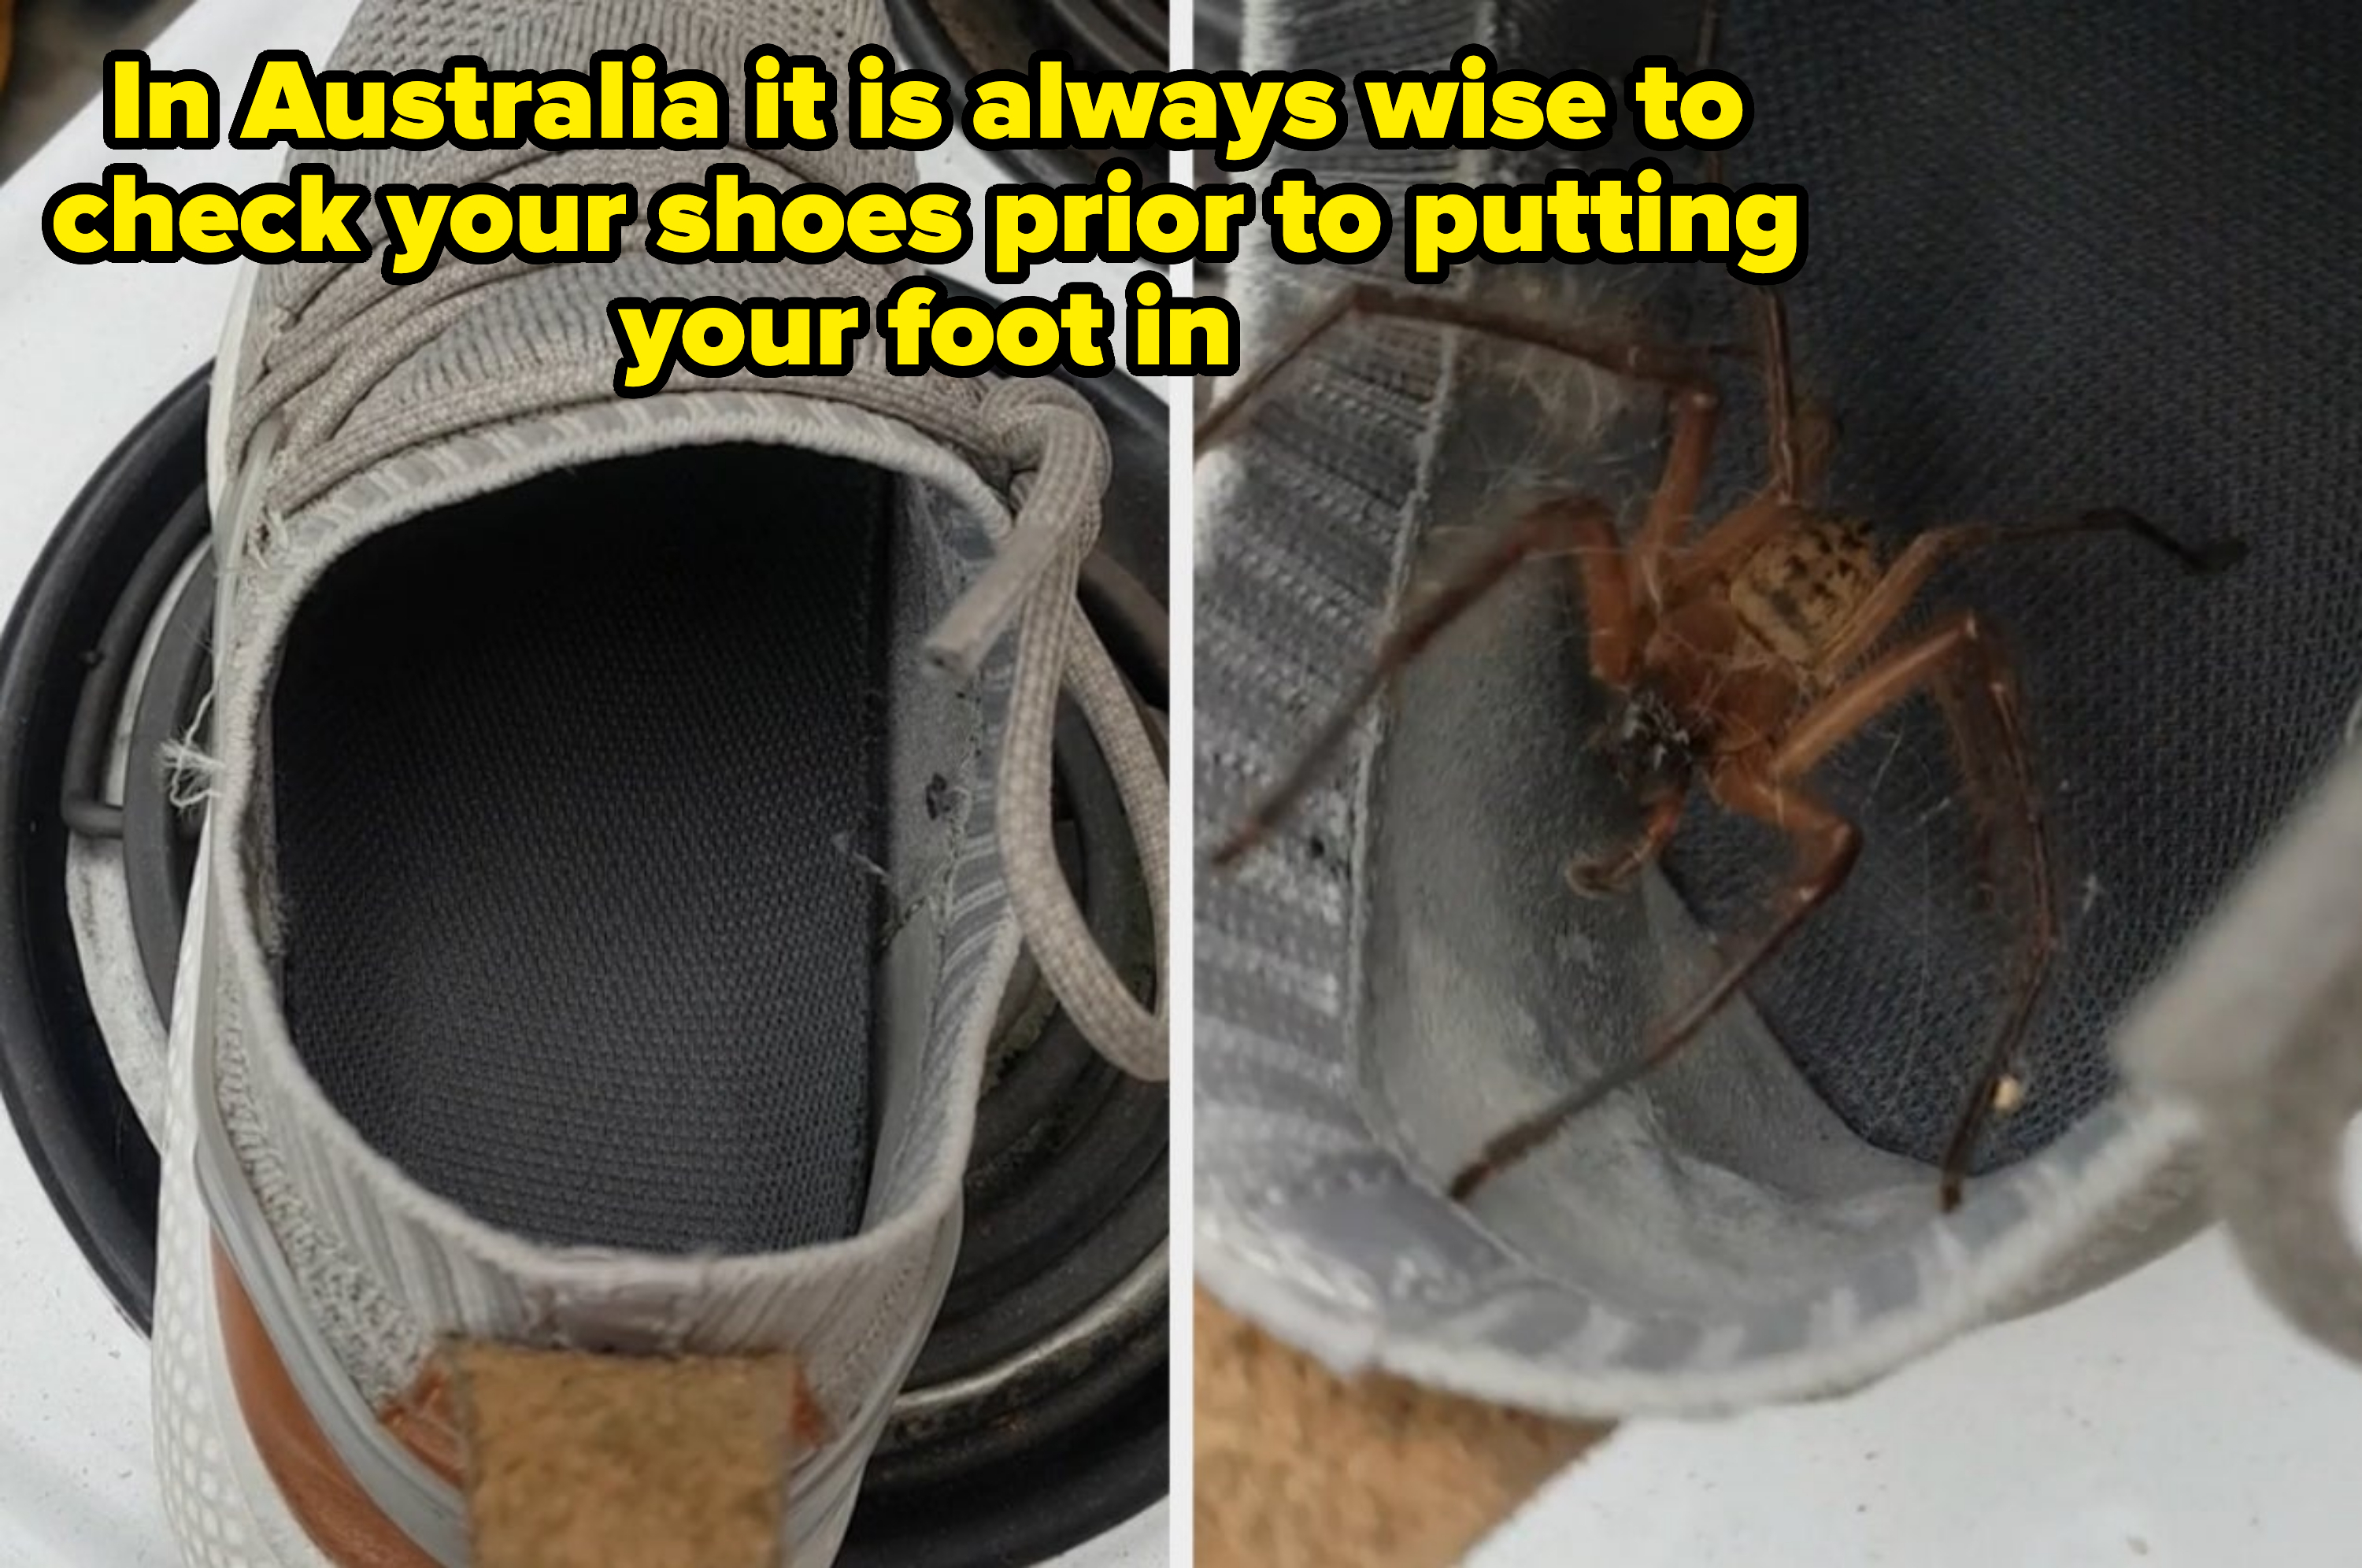 Close-up of a spider inside a shoe